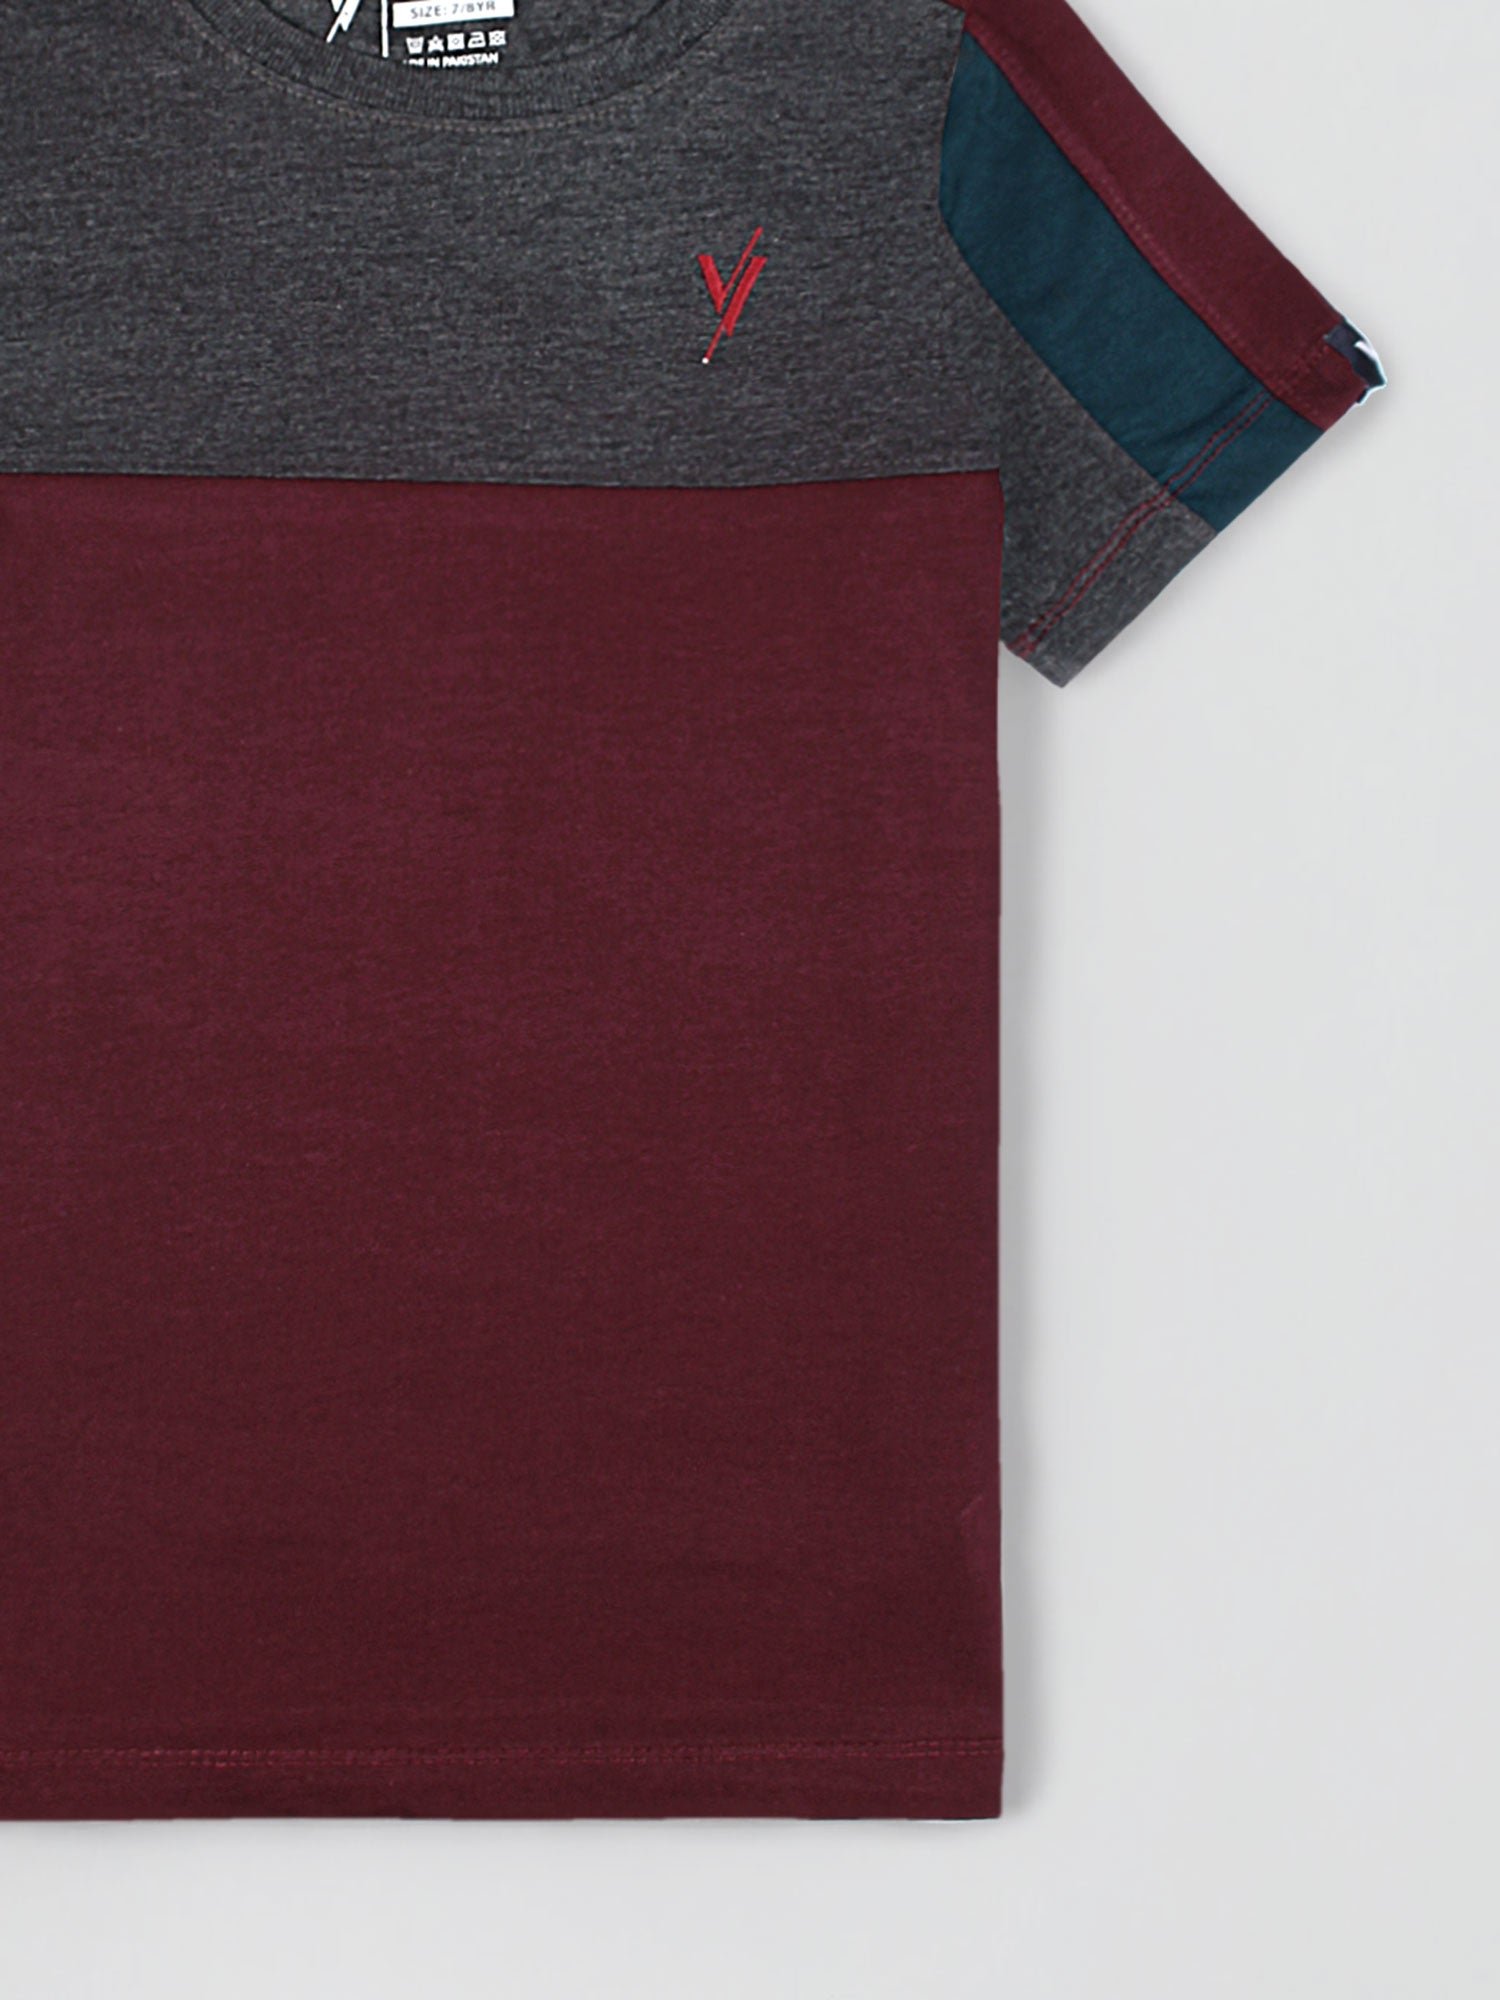 Boys Tee Shirt (Half Sleeve) By Velvour Art# VBT03-A - Velvour Shop